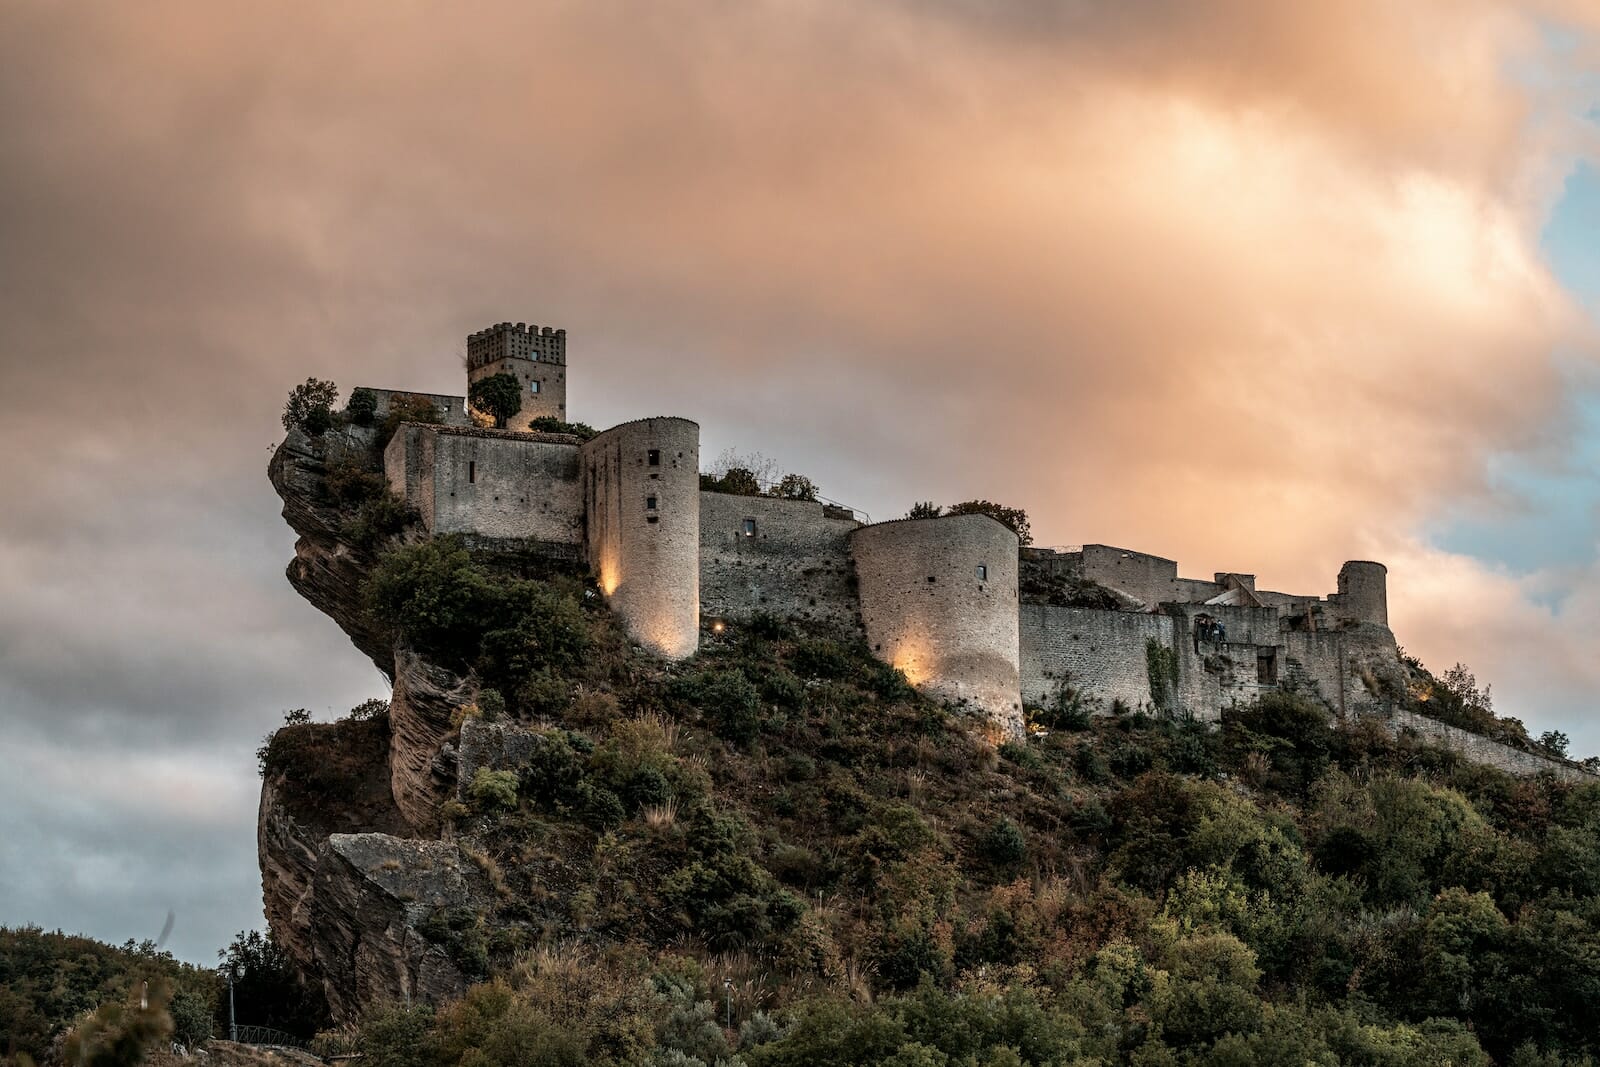 Abruzzo, one of the many regions of Italy